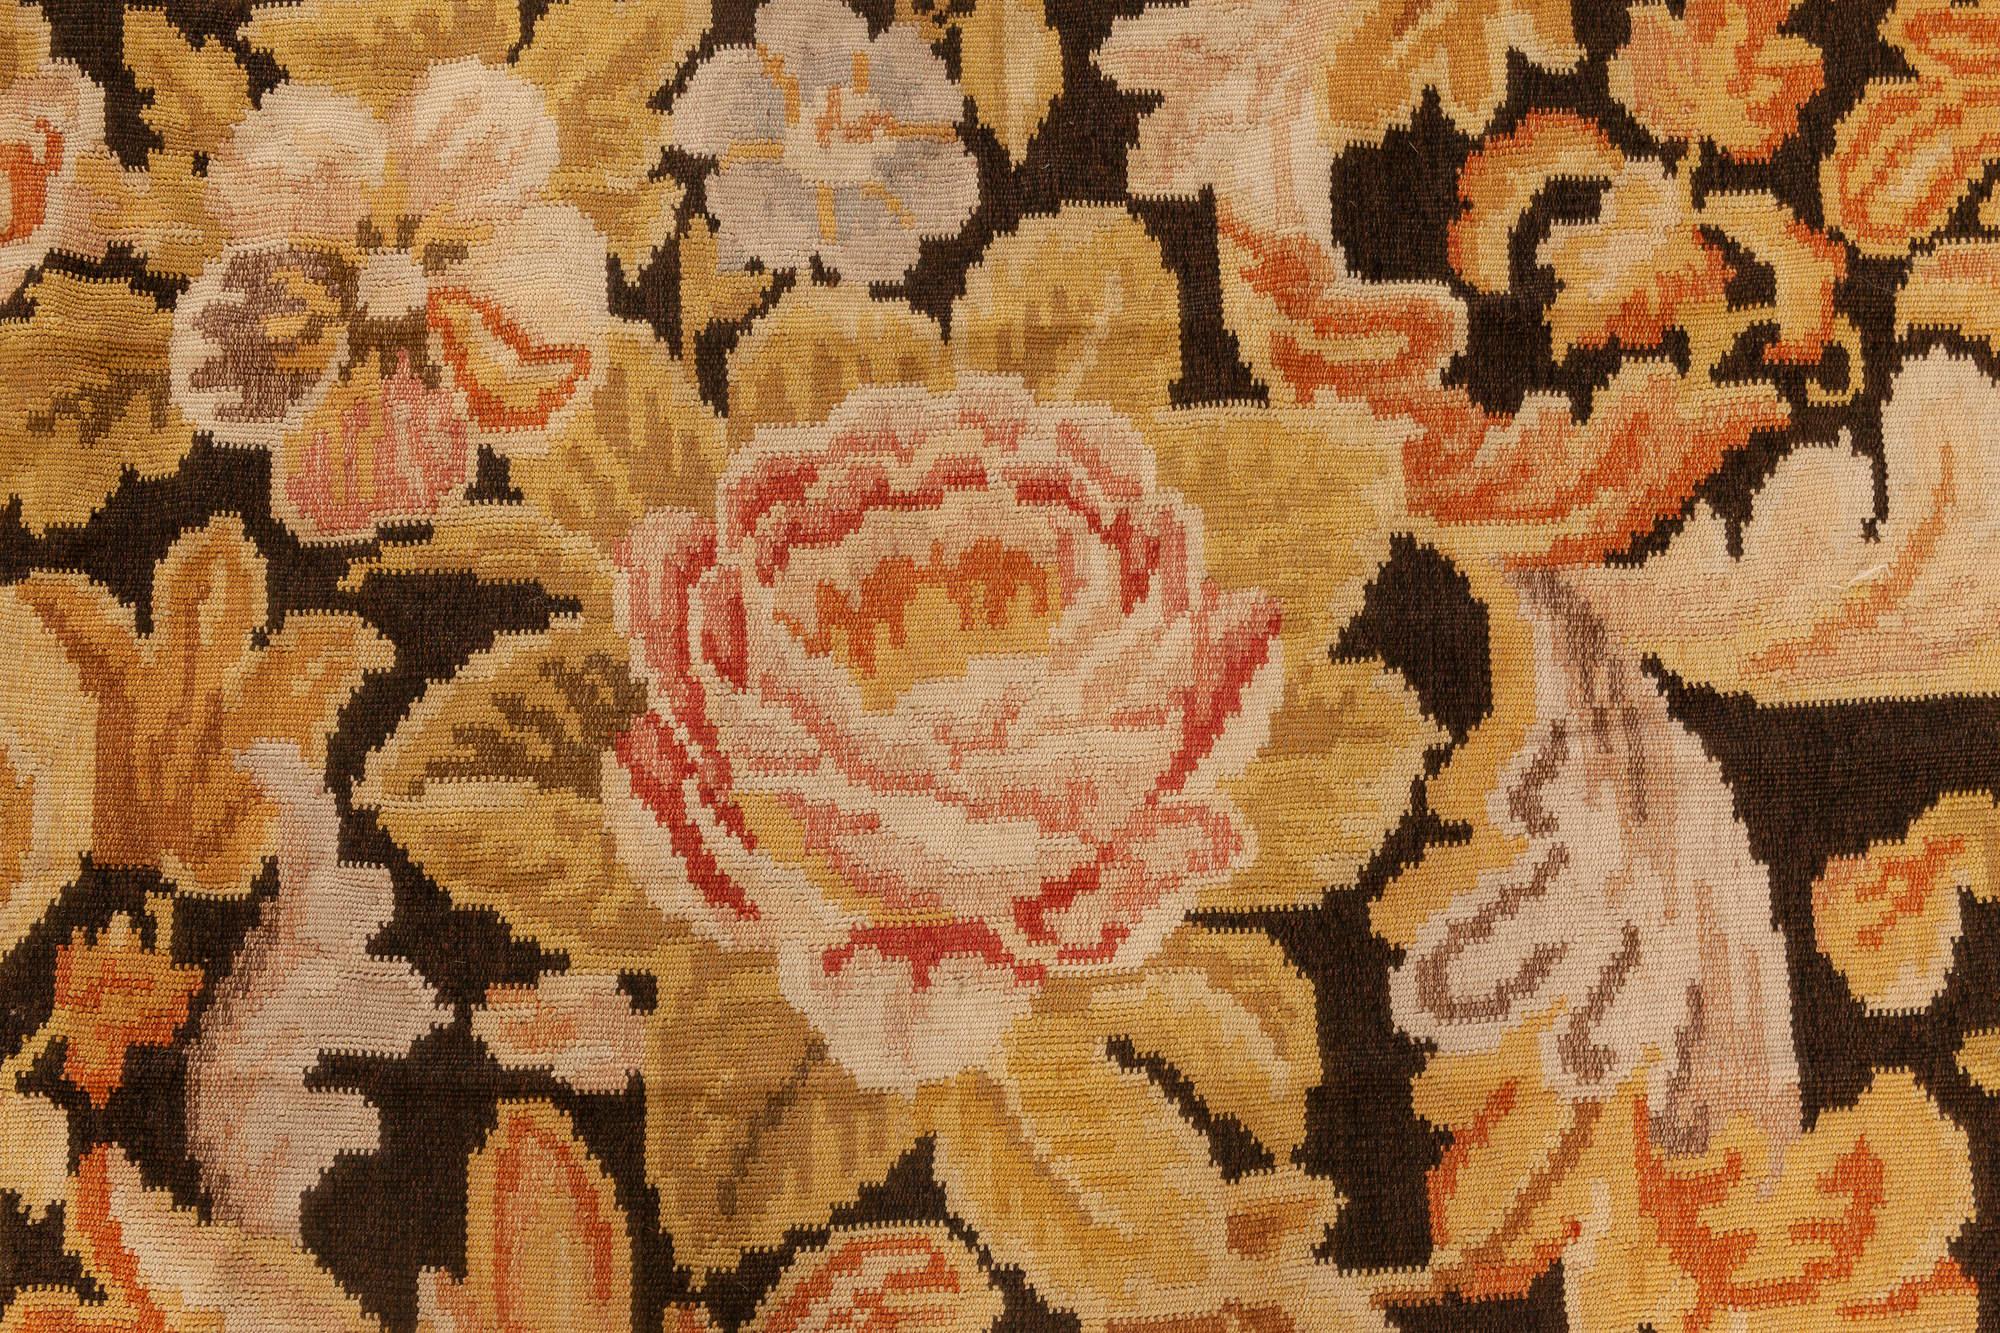 Contemporary Bessarabian Floral Flat Weave rug by Doris Leslie Blau
Size: 11'10